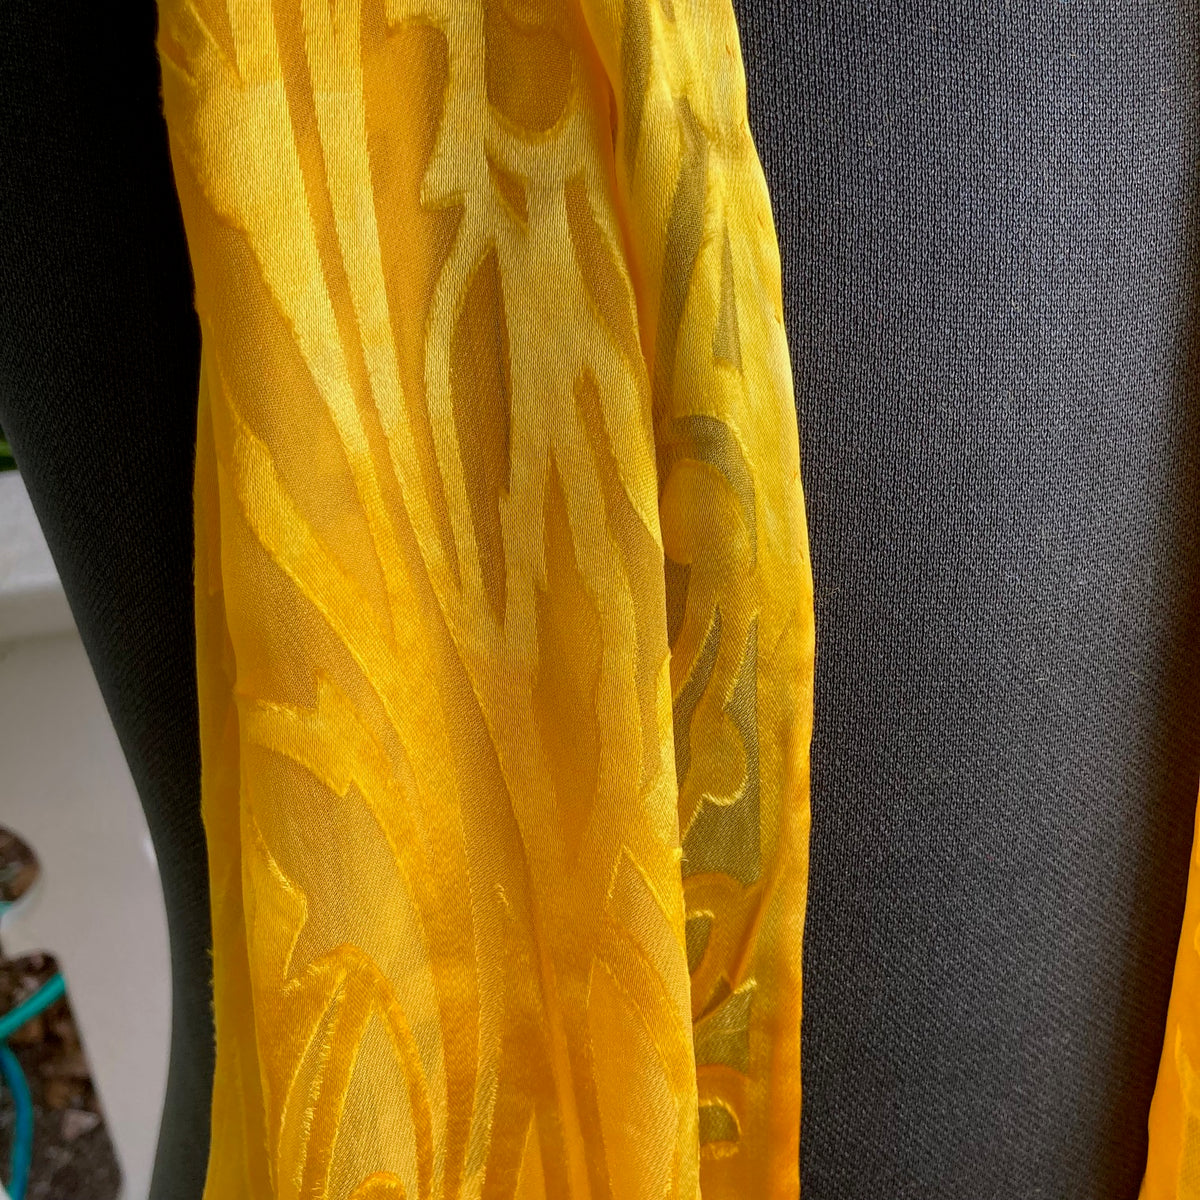 Devore Silk & Rayon Scarf in Golden Yellow in Art Deco Design